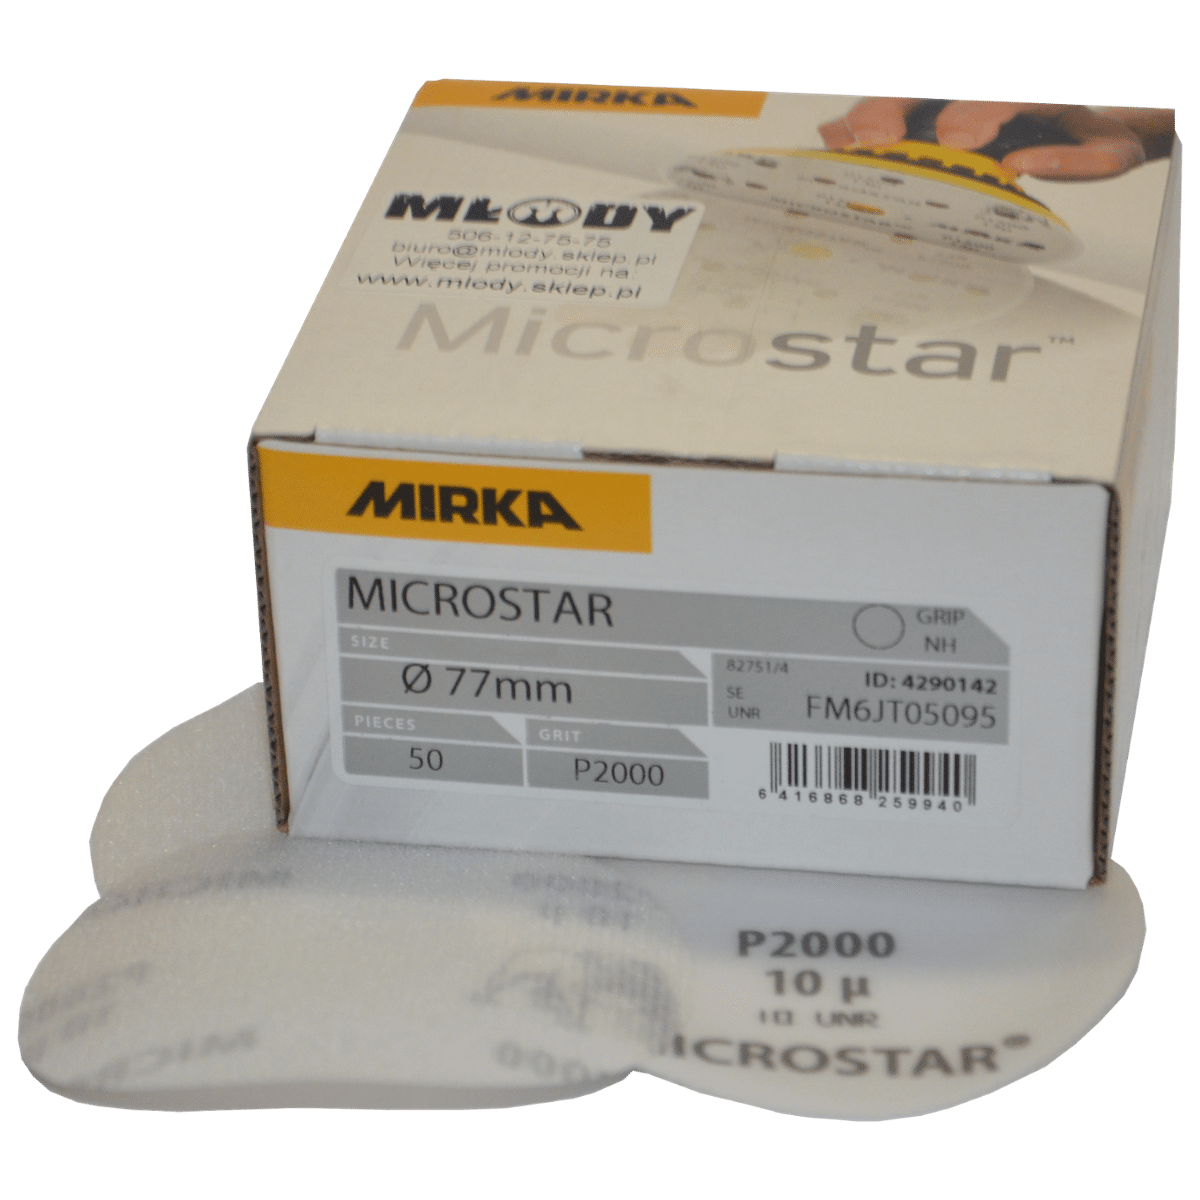 MIRKA Microstar 77mm na Rzep Papier Ścierny Krążek Granulacja 2000